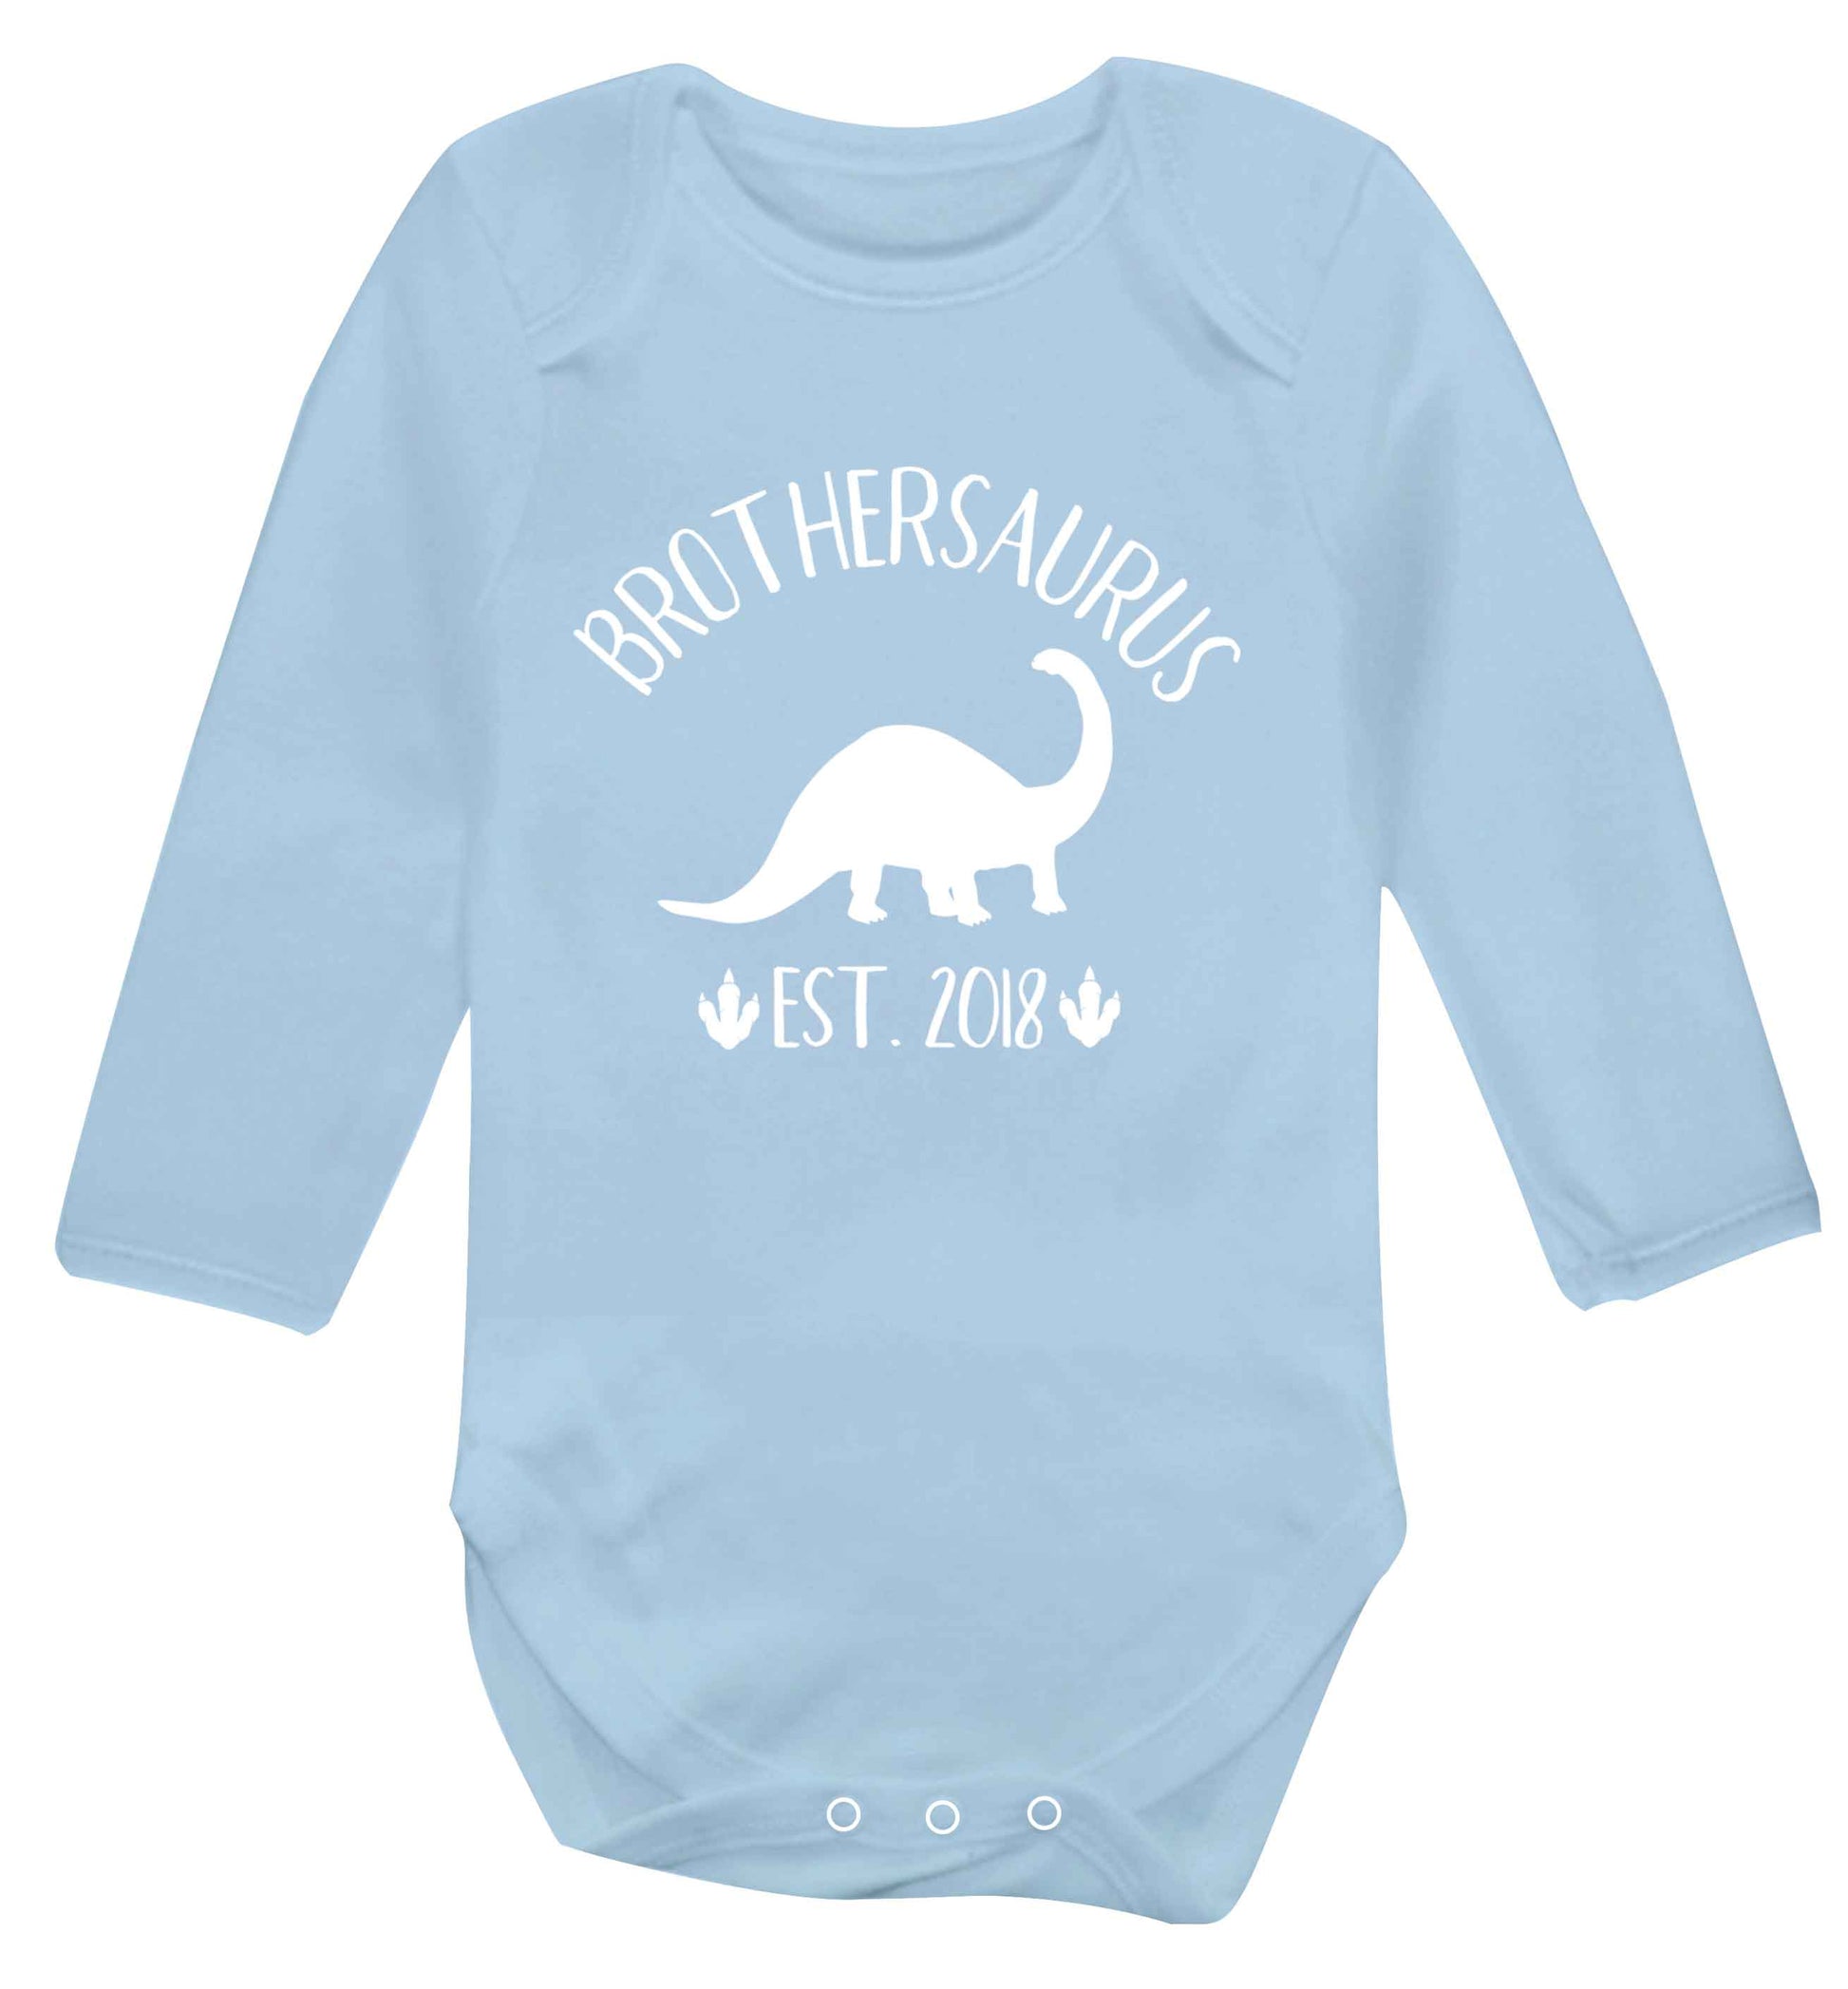 Personalised brothersaurus since (custom date) Baby Vest long sleeved pale blue 6-12 months